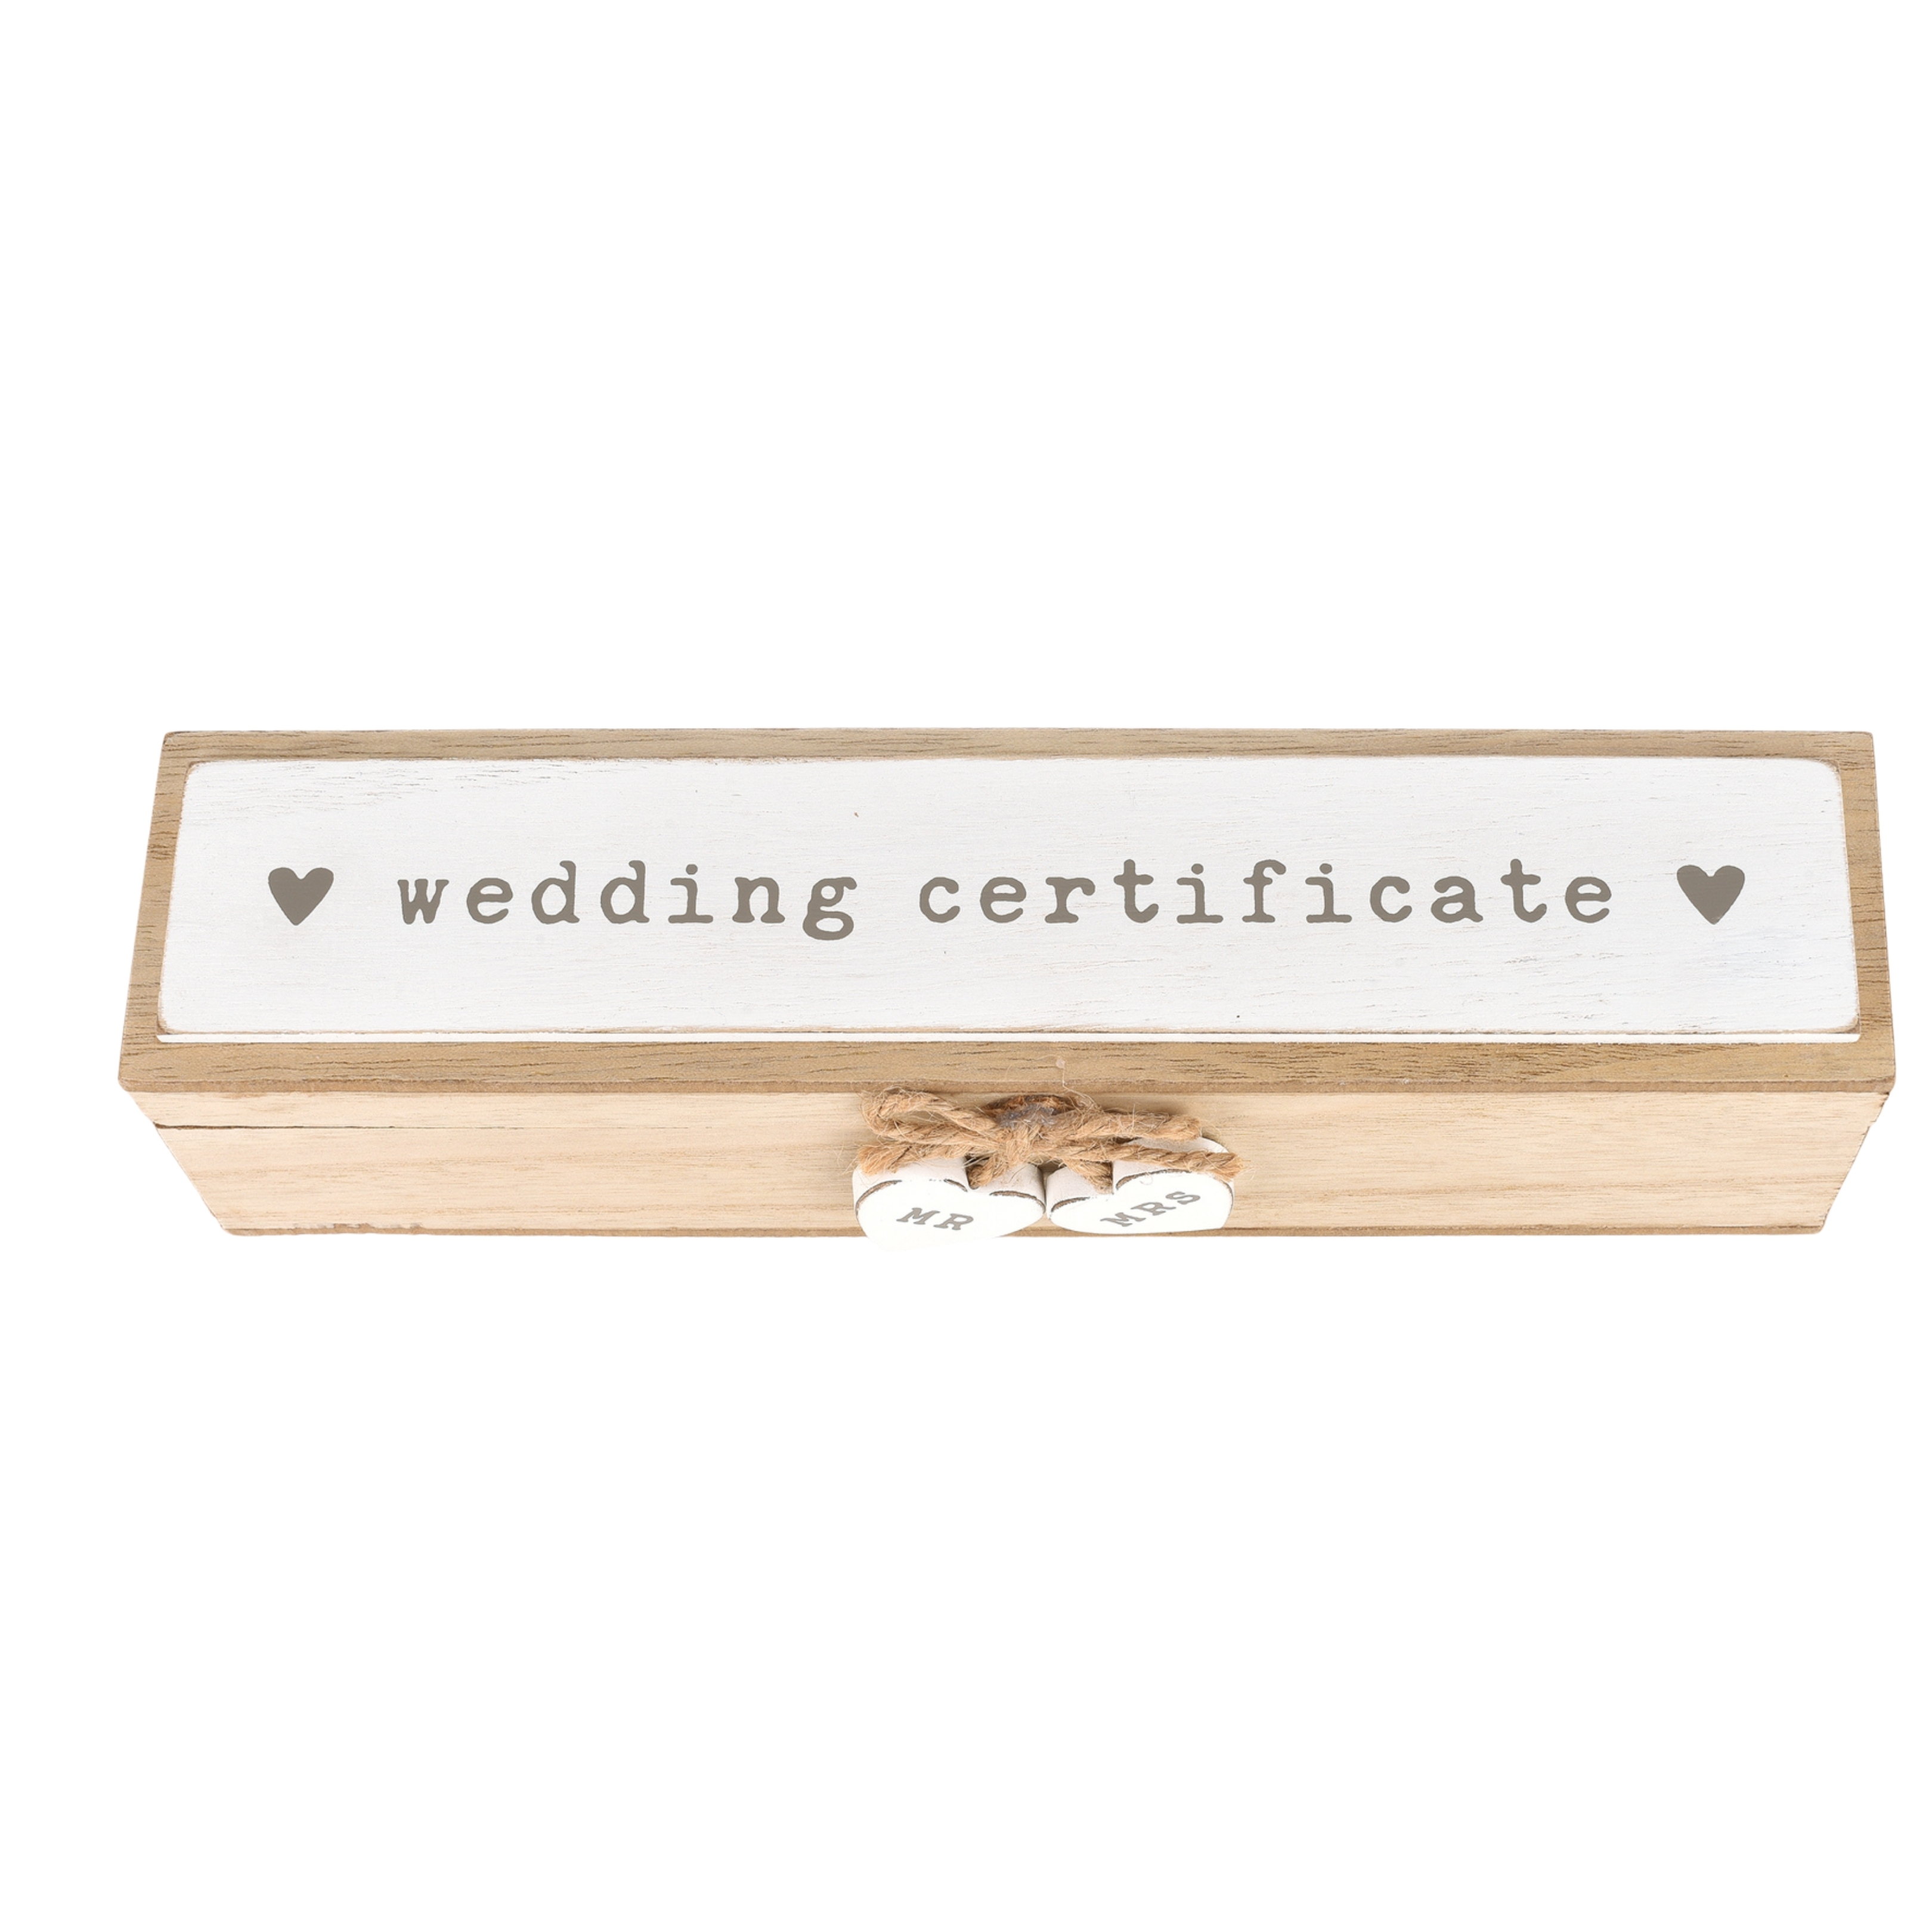 Widdop Love Story Mr and Mrs Wooden Wedding Certificate Keepsake Box